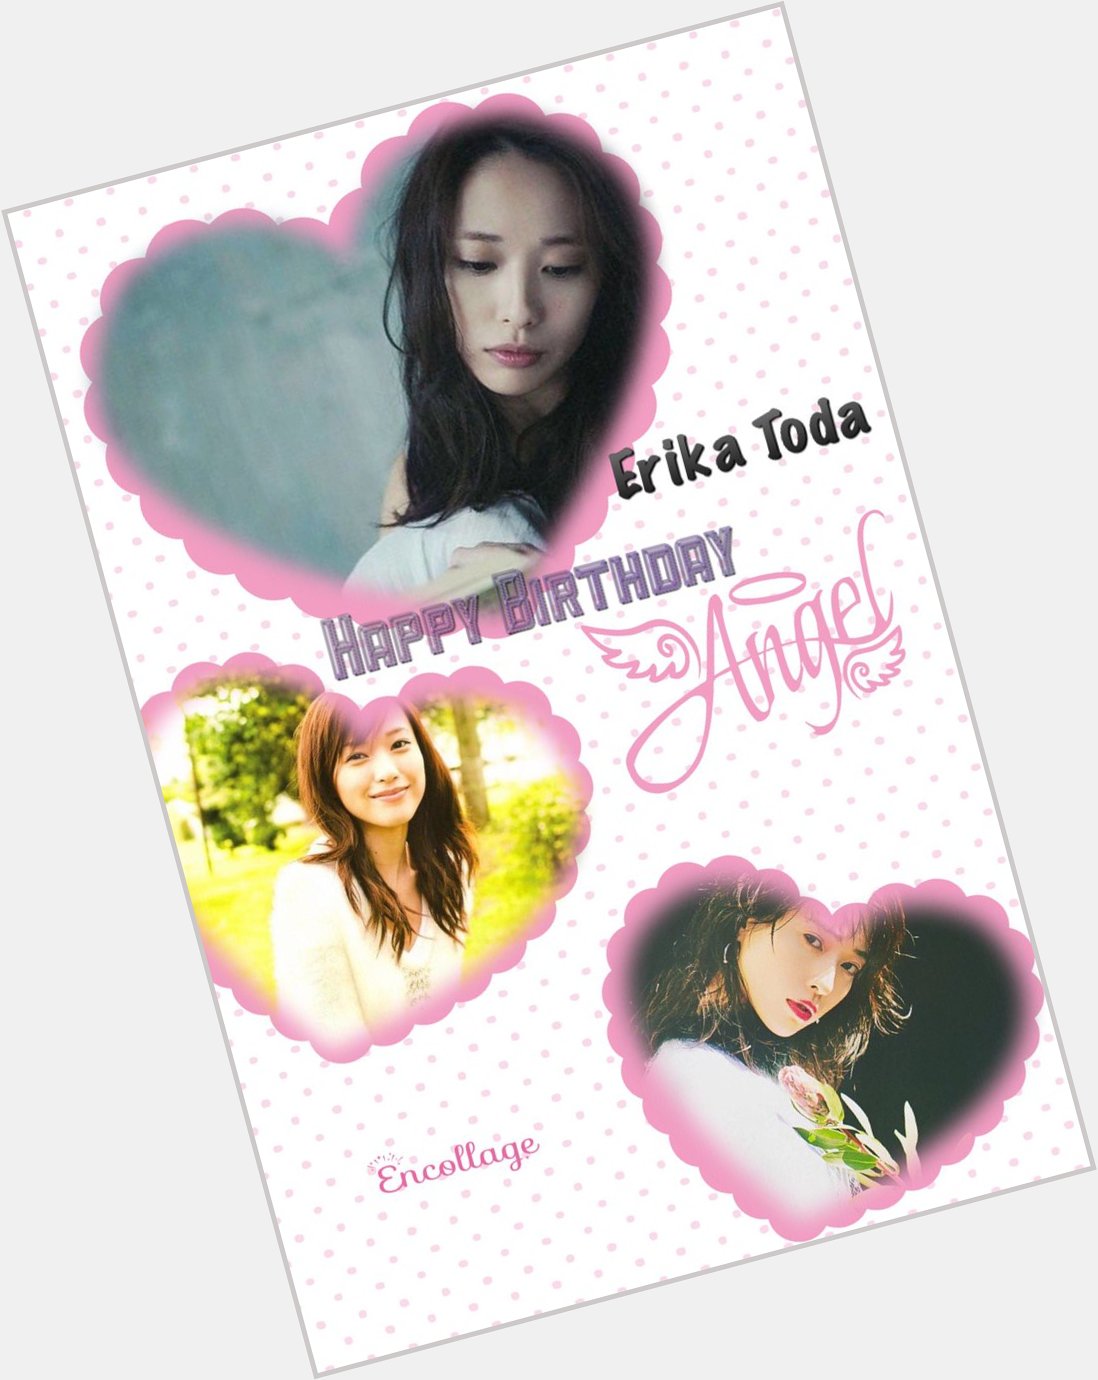 2017.08.17
Happy Birthday Erika Toda                       